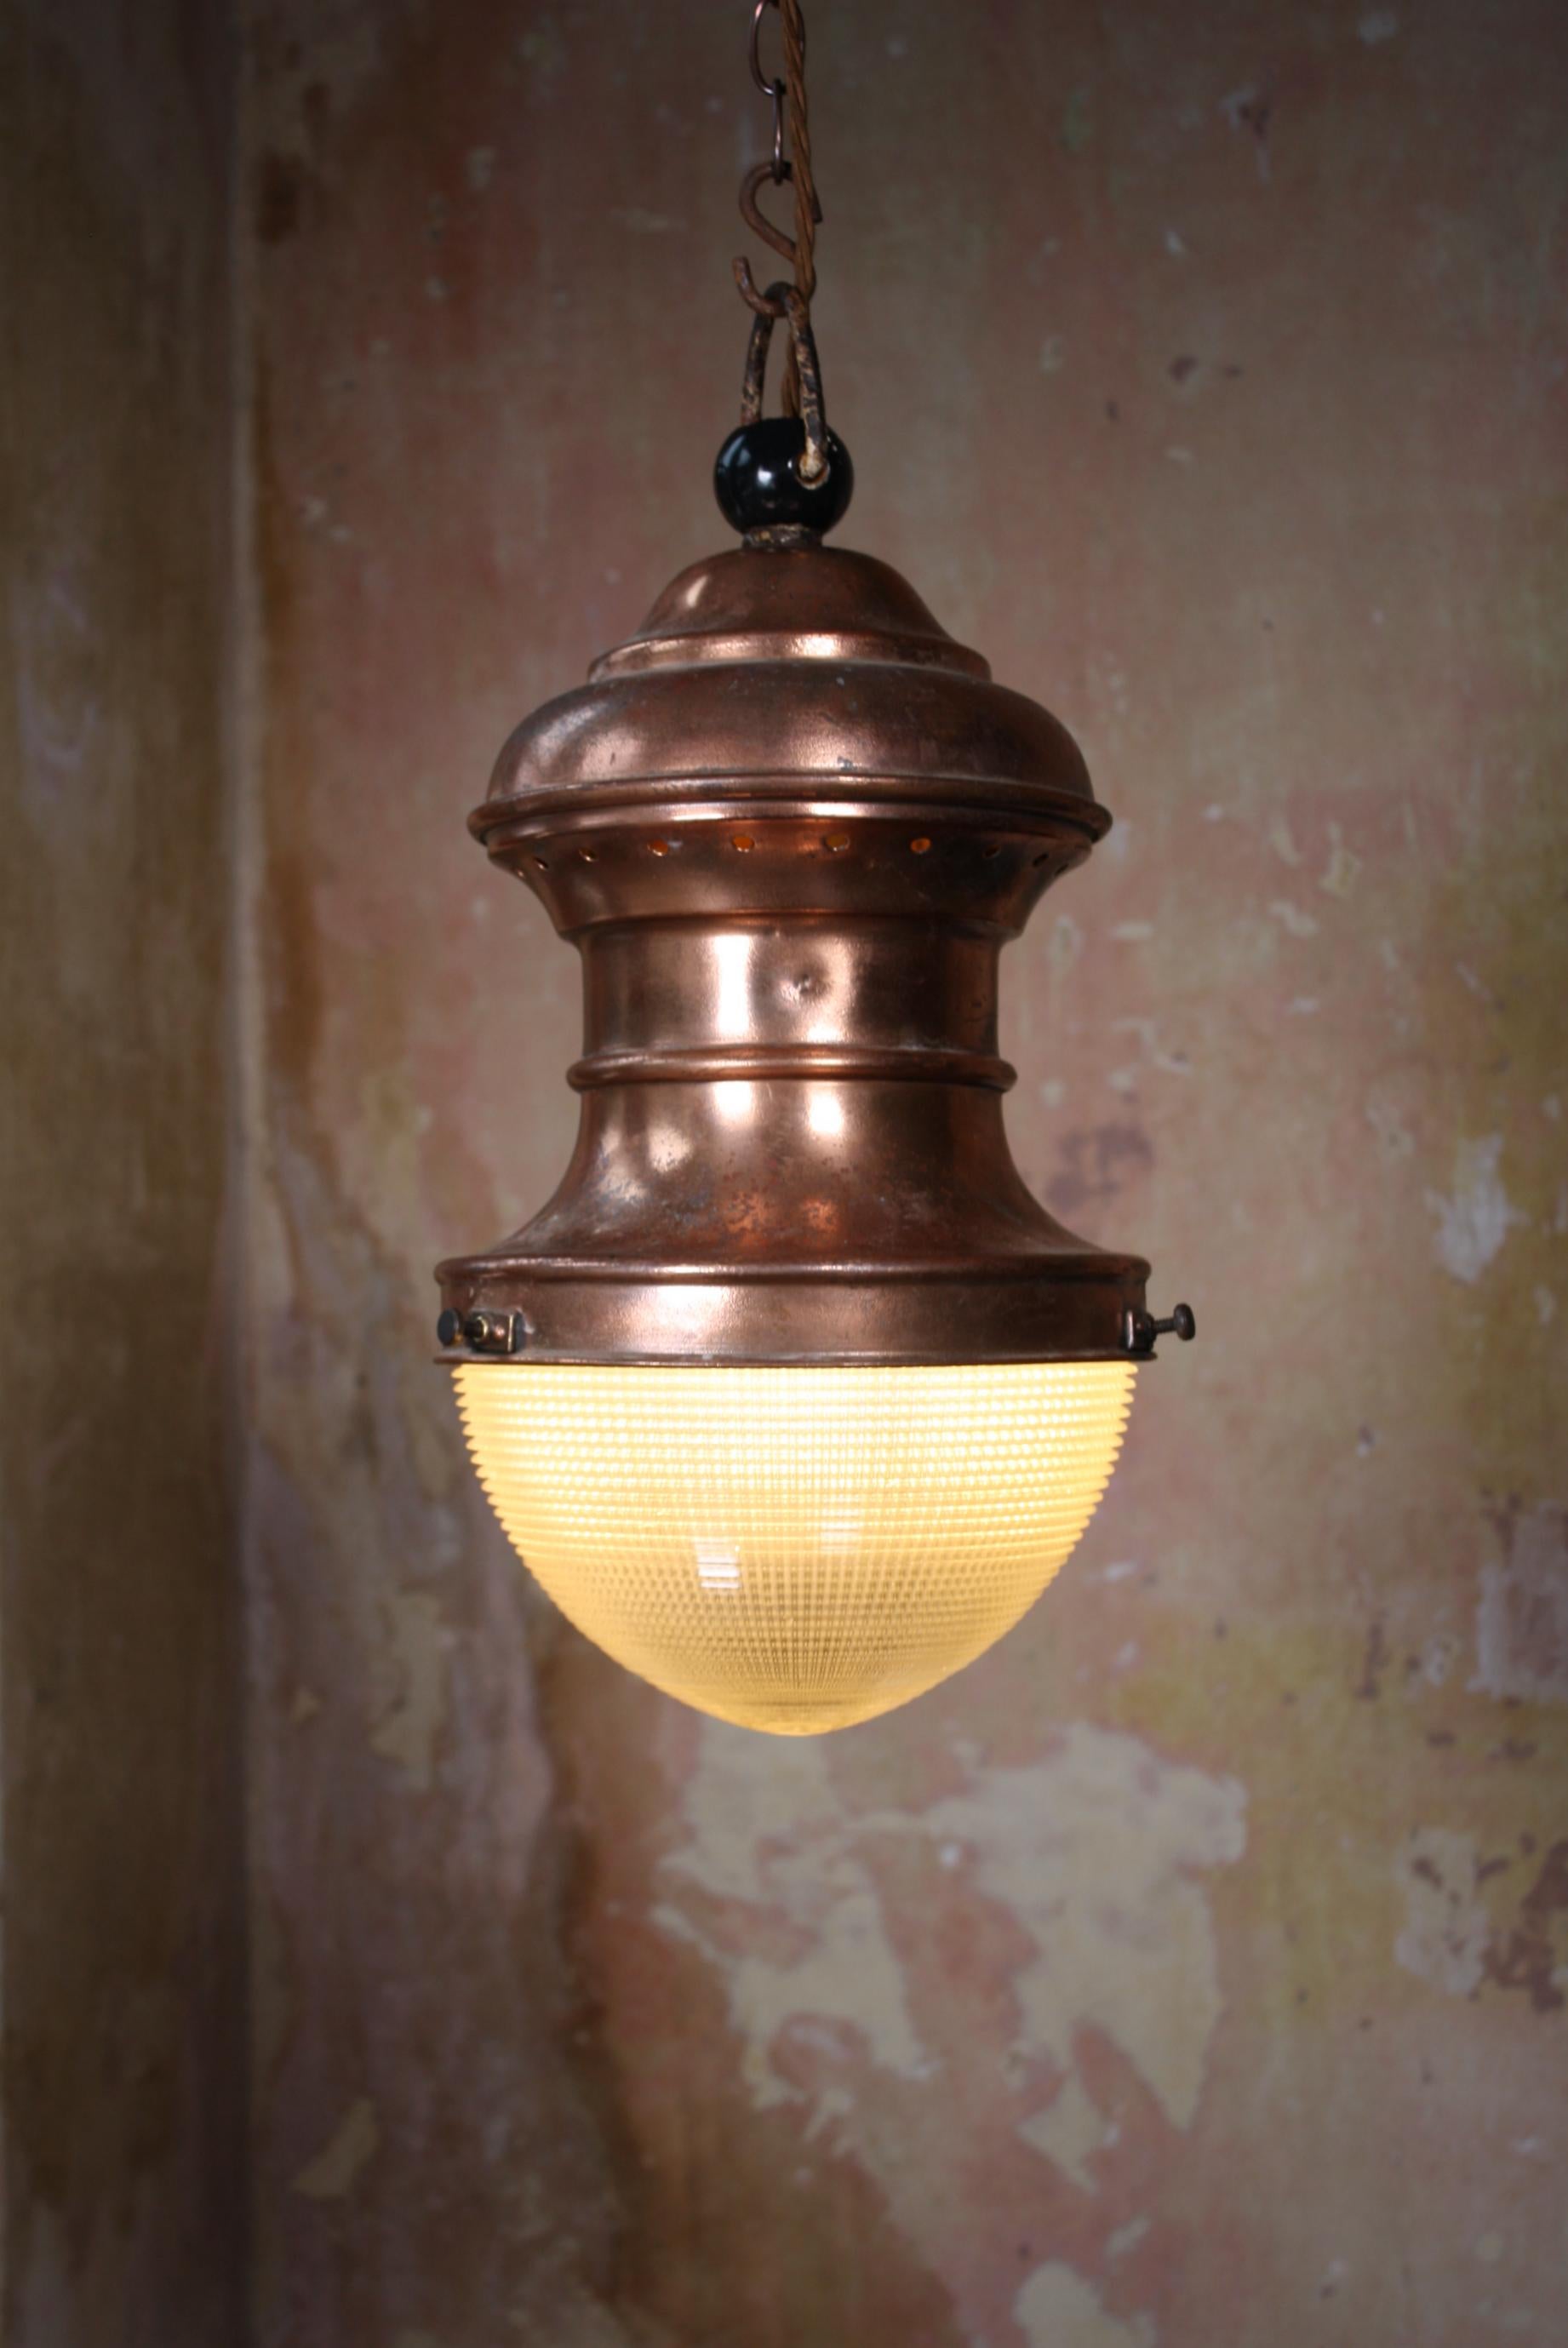 English 20th Century Industrial Falk, Stadelmann and Co Exterior Lantern Light Pendant